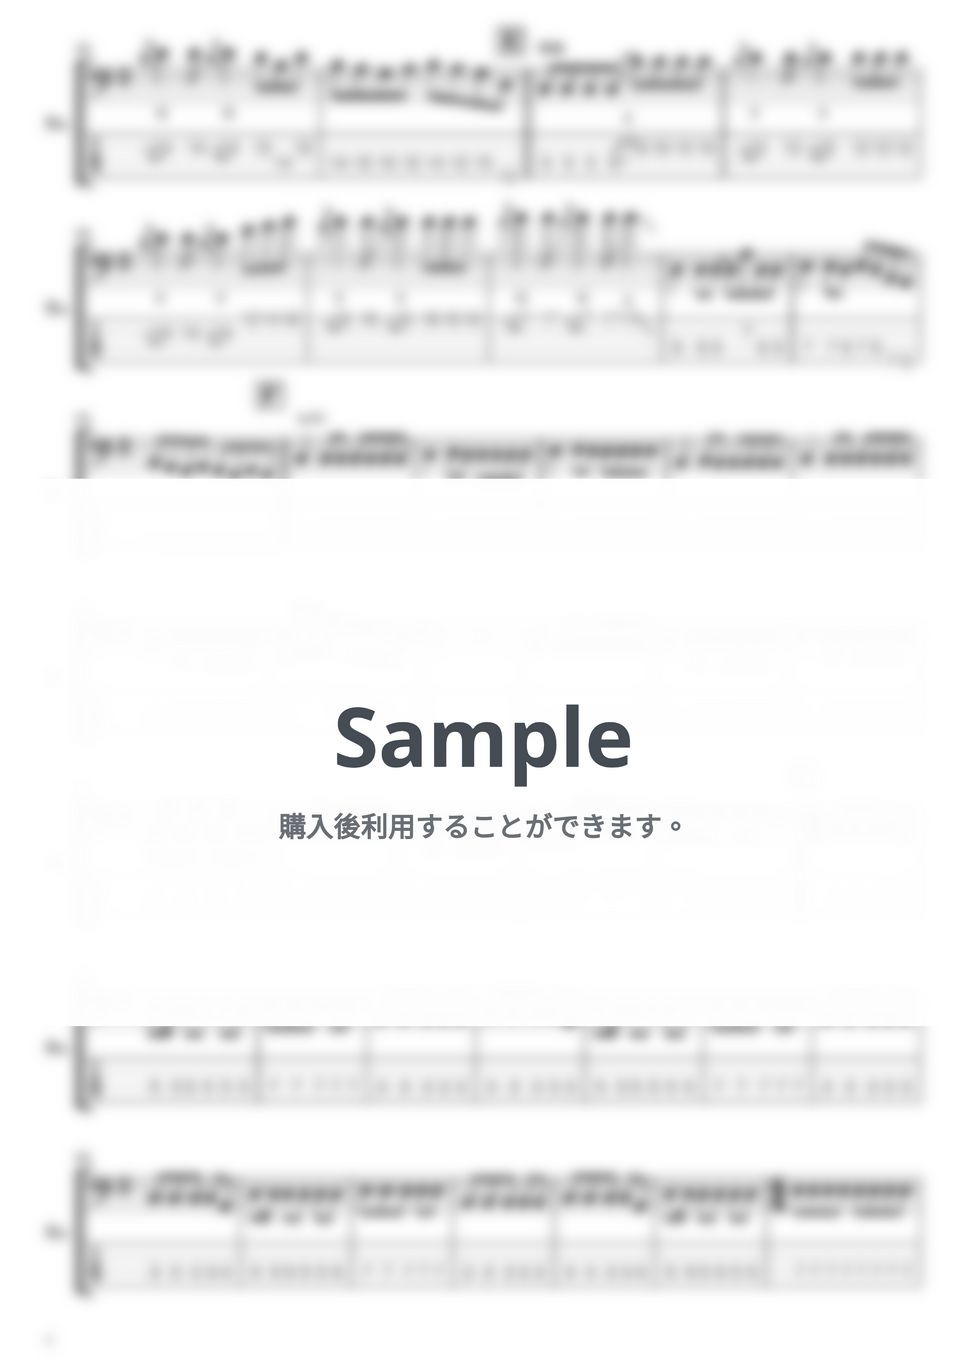 yutori - 午前零時 (ベースTAB譜) by やまさんルーム